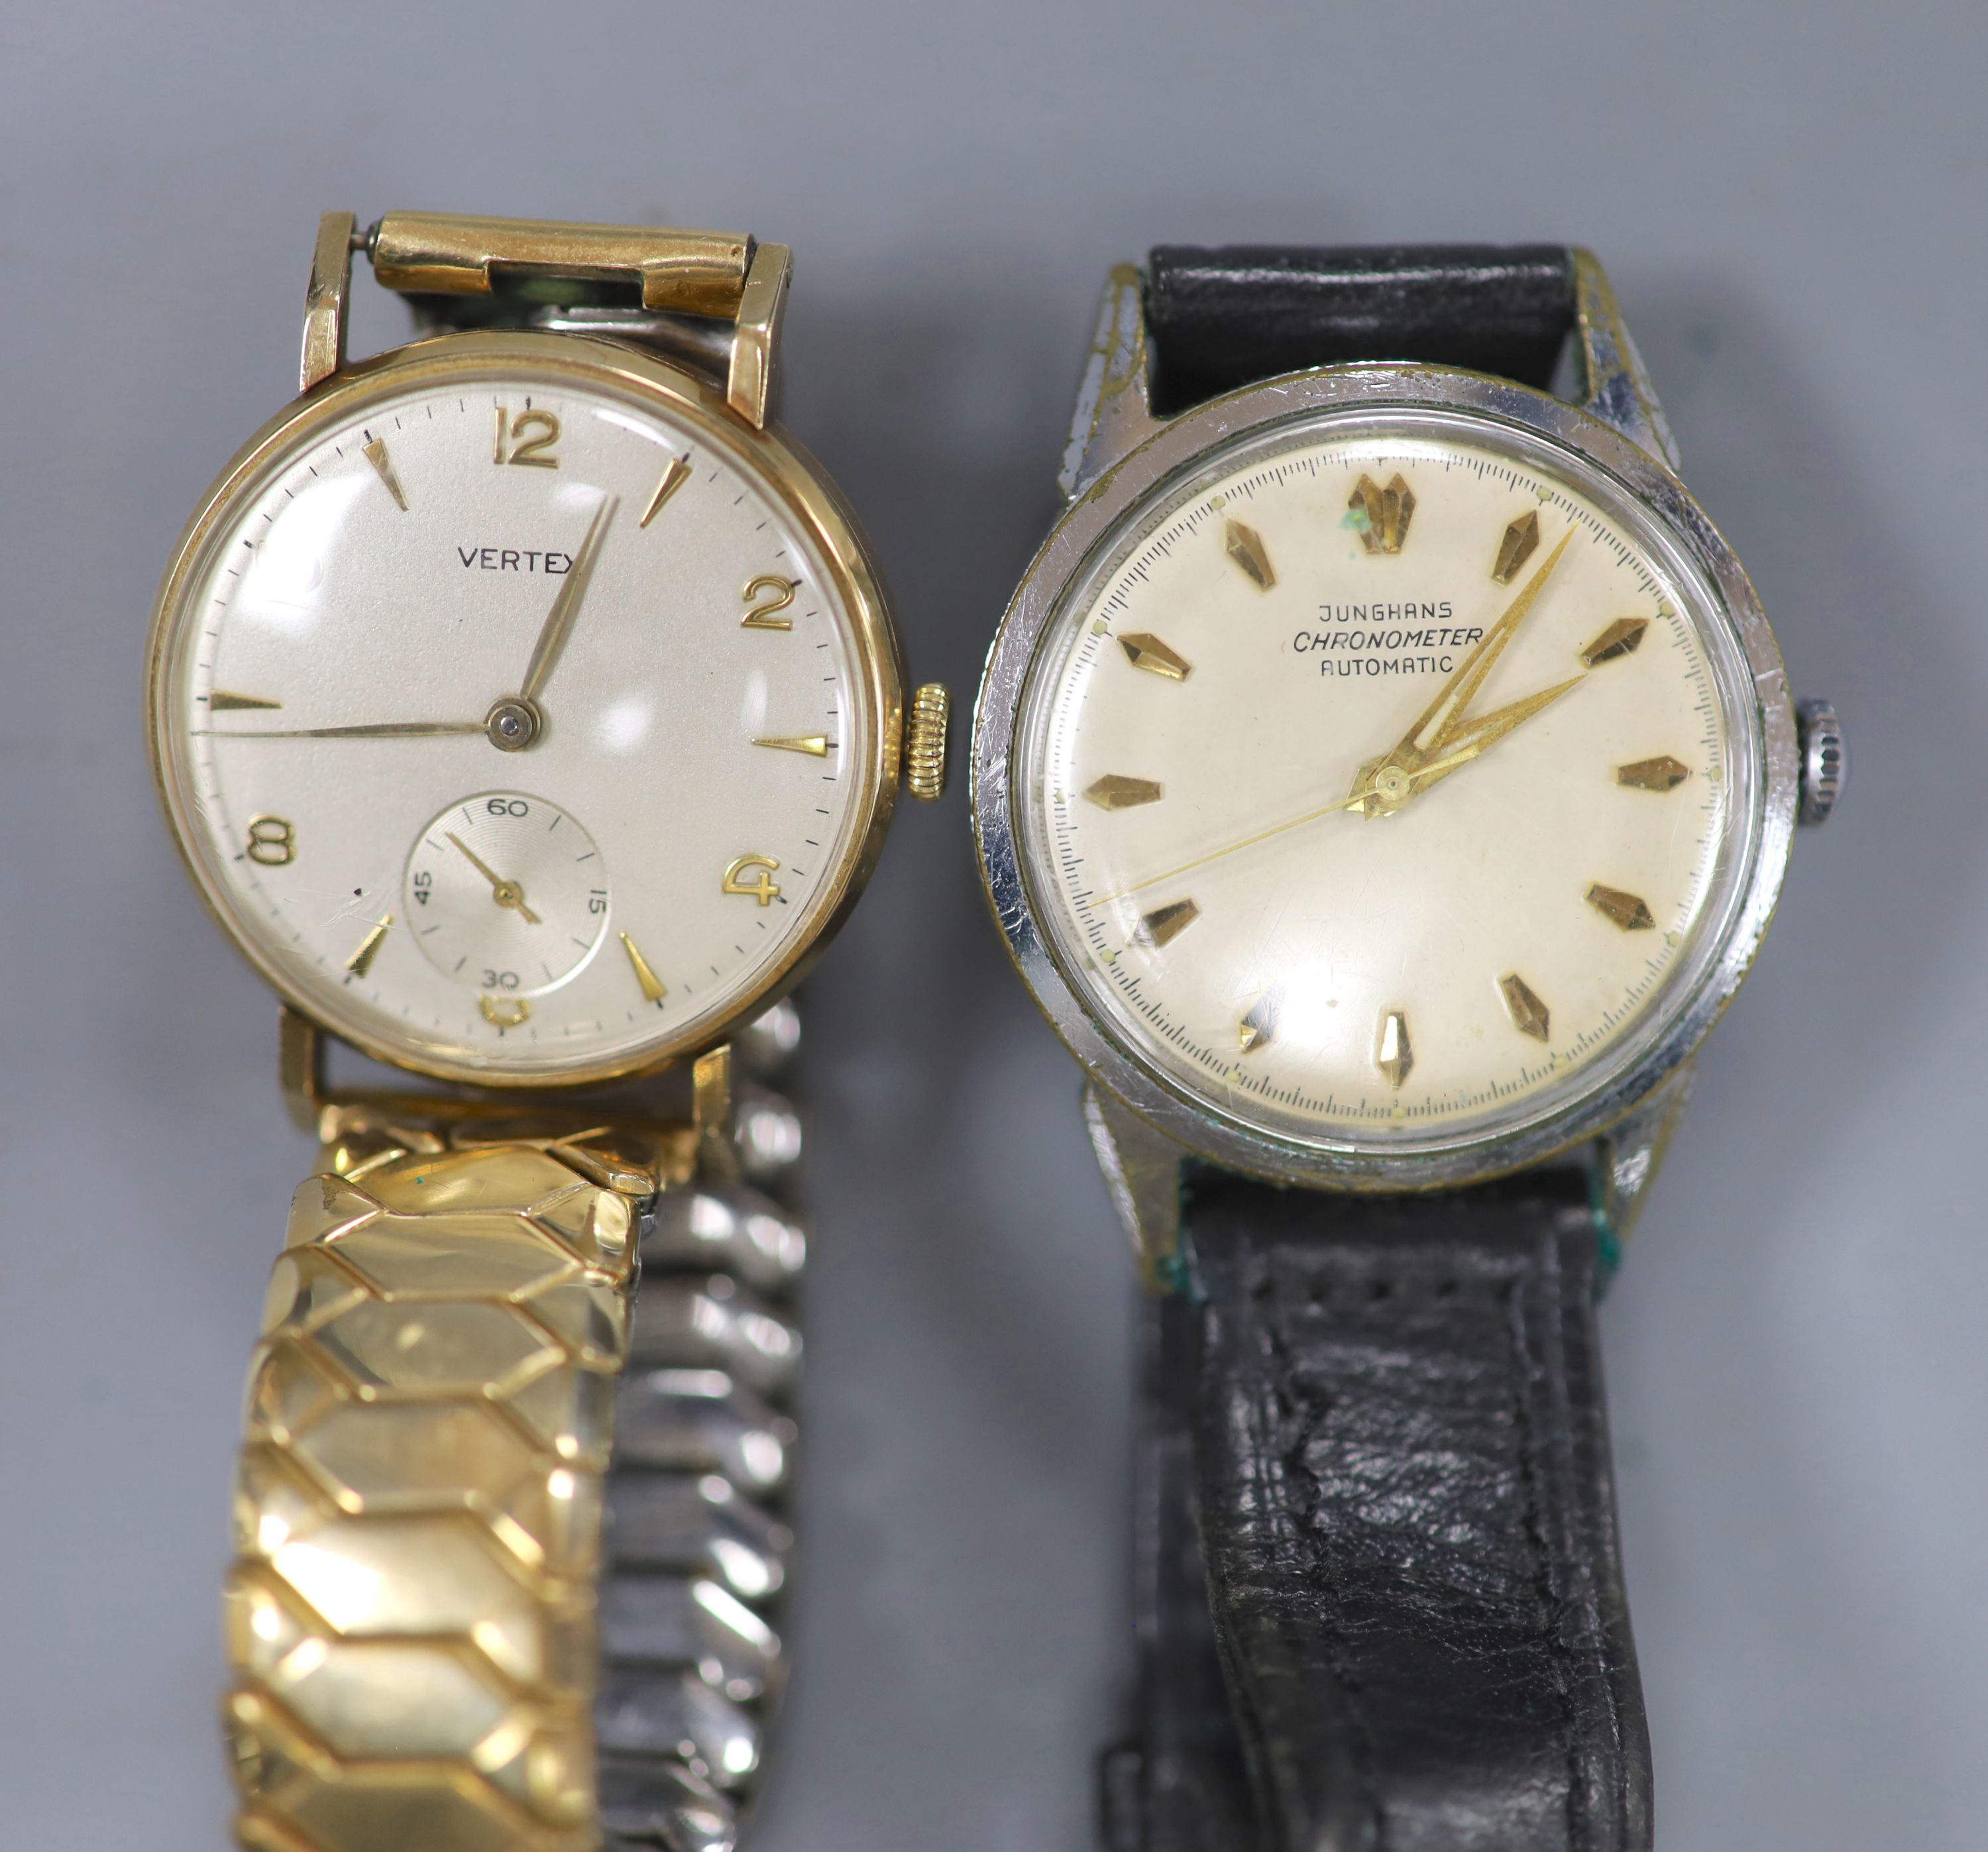 A gentlemans 9ct gold Vertex manual wind wrist watch, with case back inscription & a Junghans steel watch.